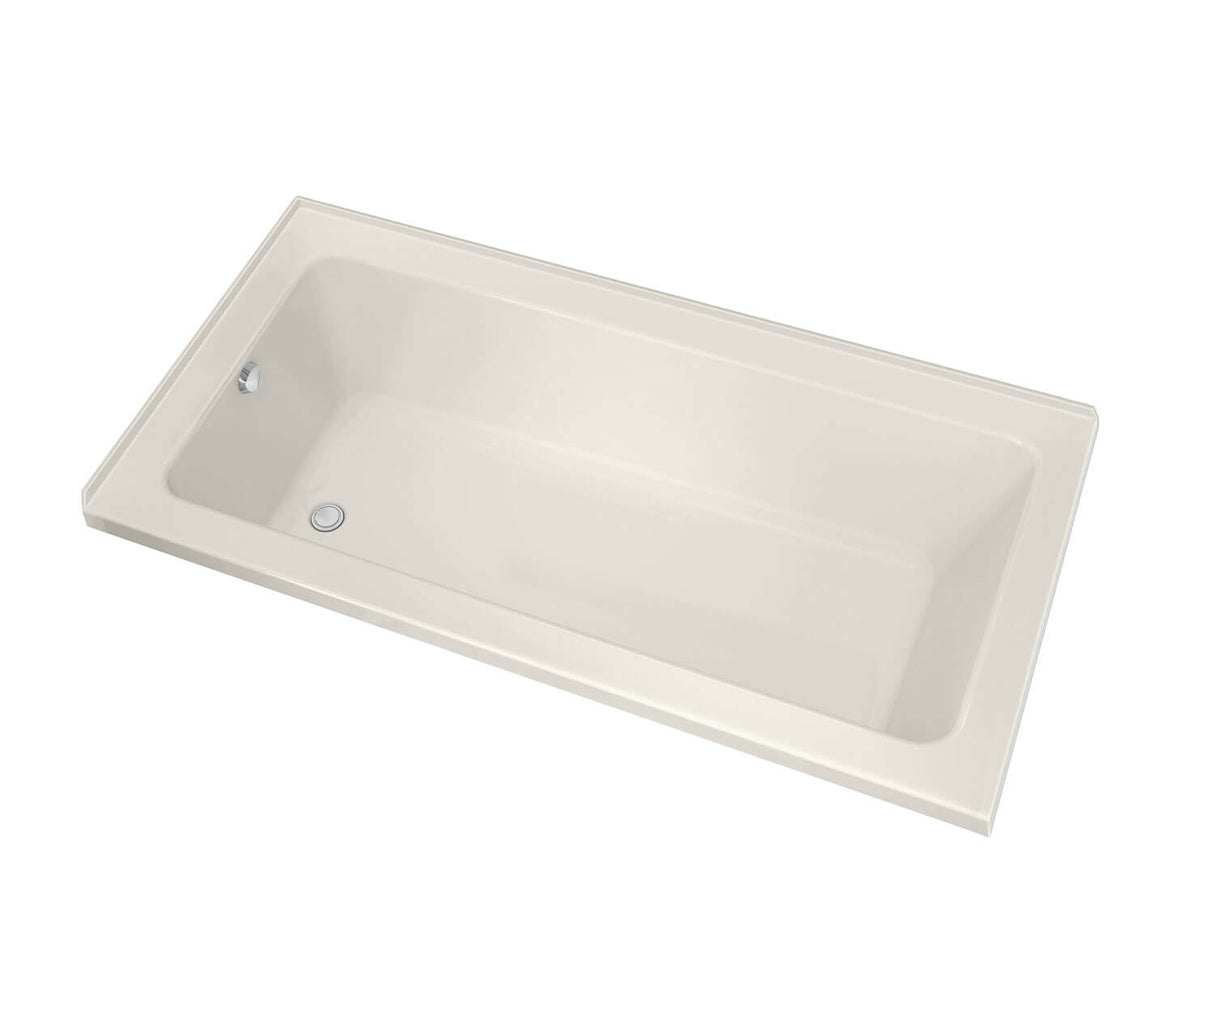 MAAX 106214-L-003-007 Pose 7242 IF Acrylic Corner Left Left-Hand Drain Whirlpool Bathtub in Biscuit